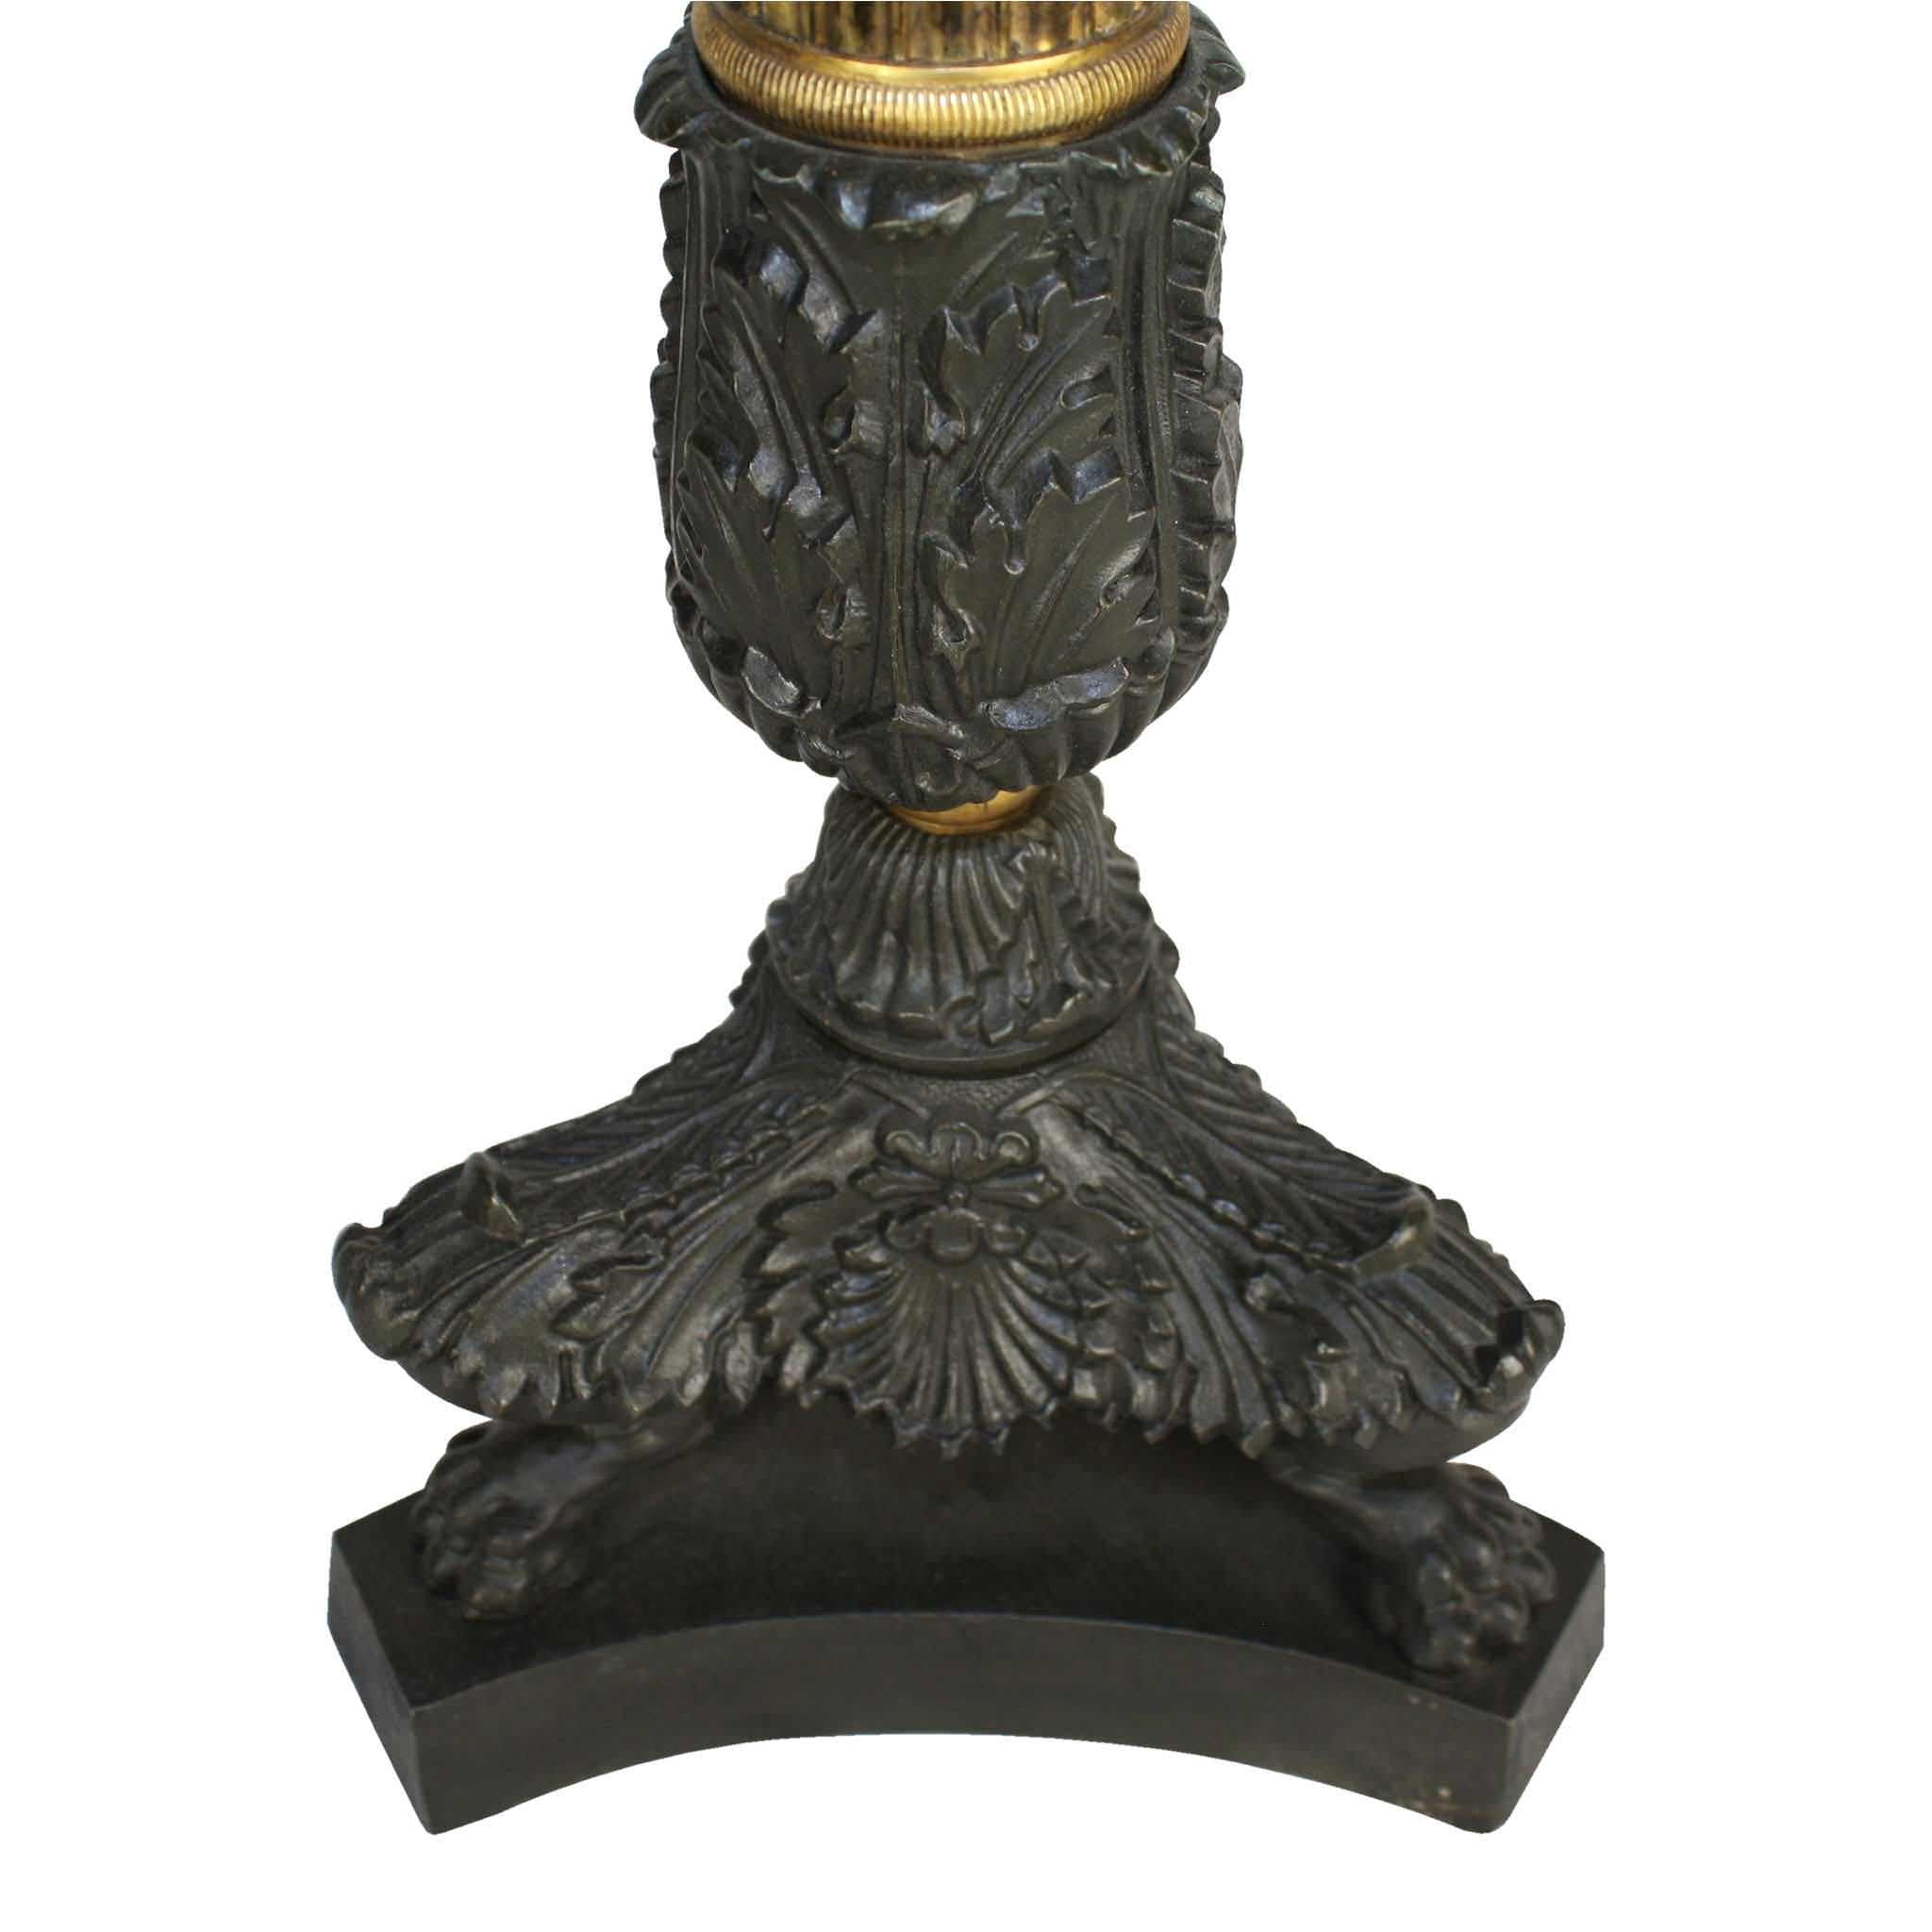 Bronze Lamp